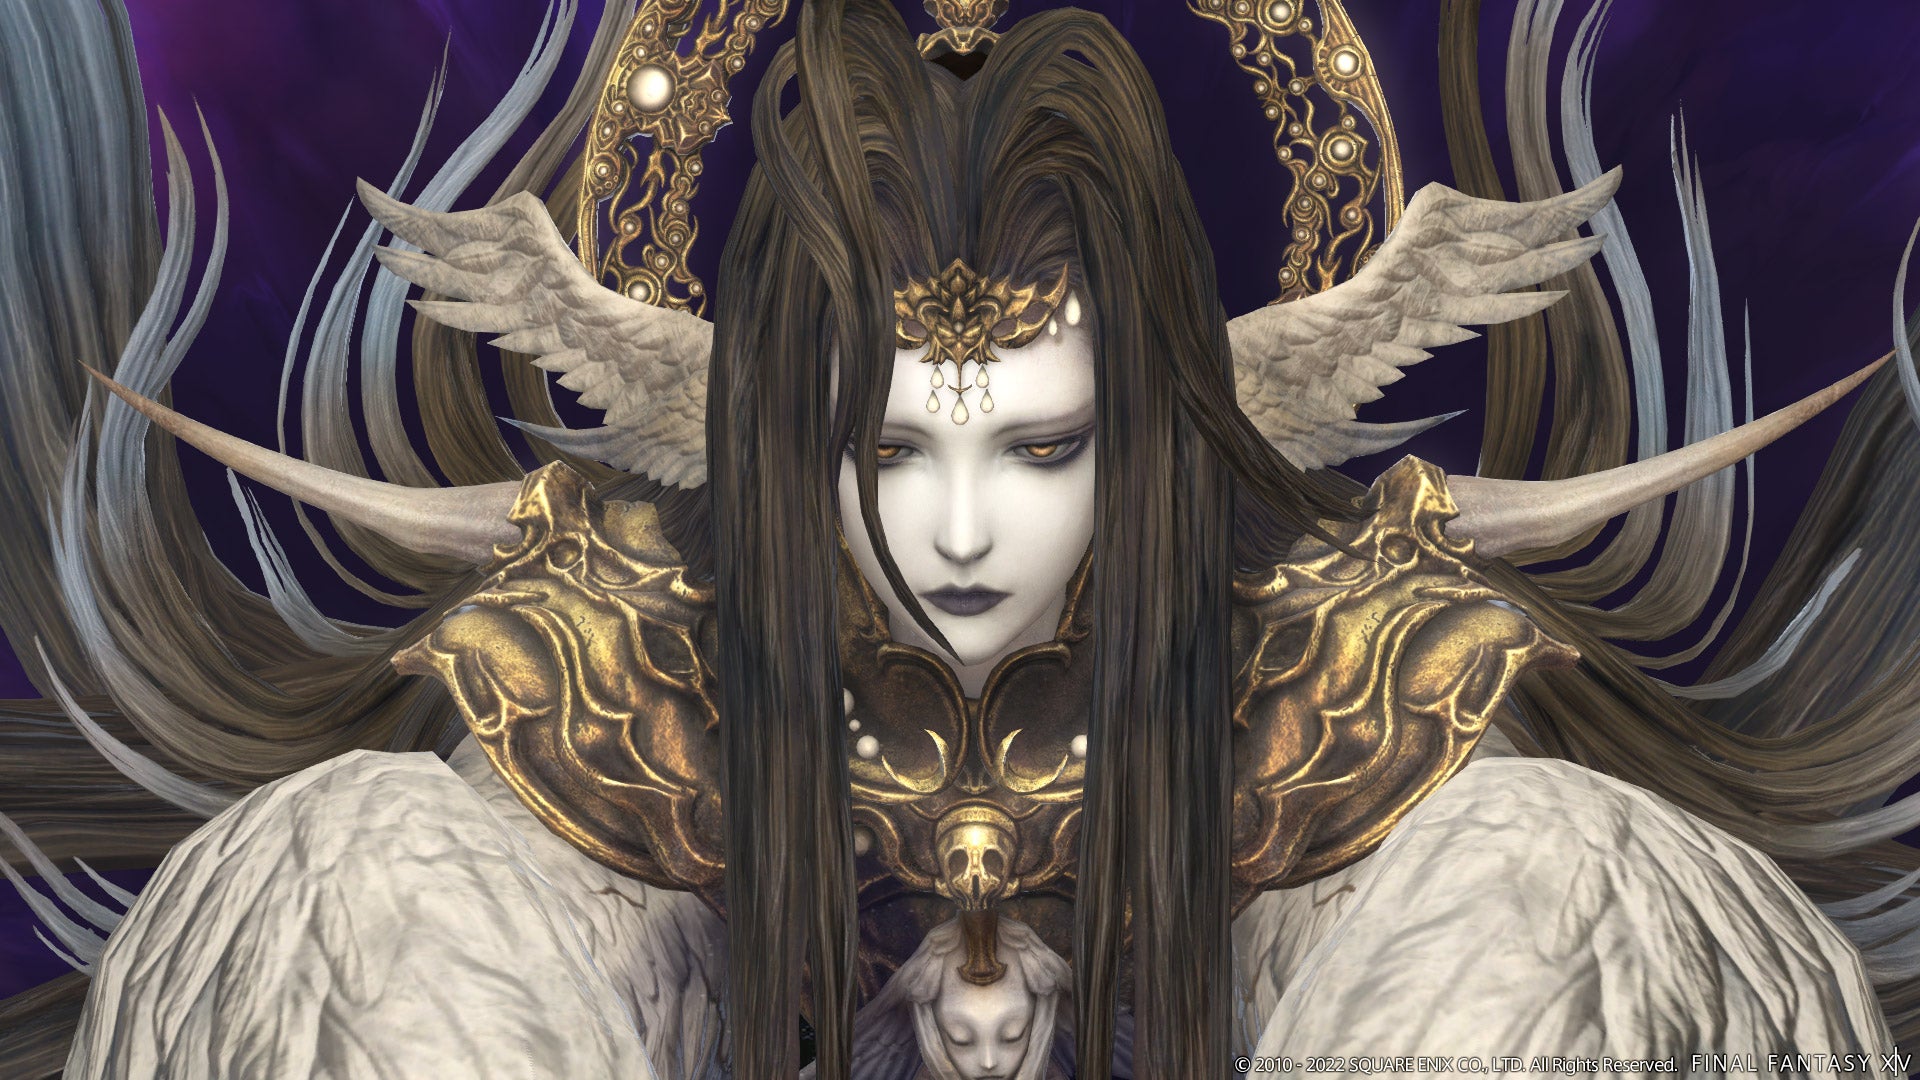 A total goth in a Final Fantasy XIV: Endwalker screenshot.